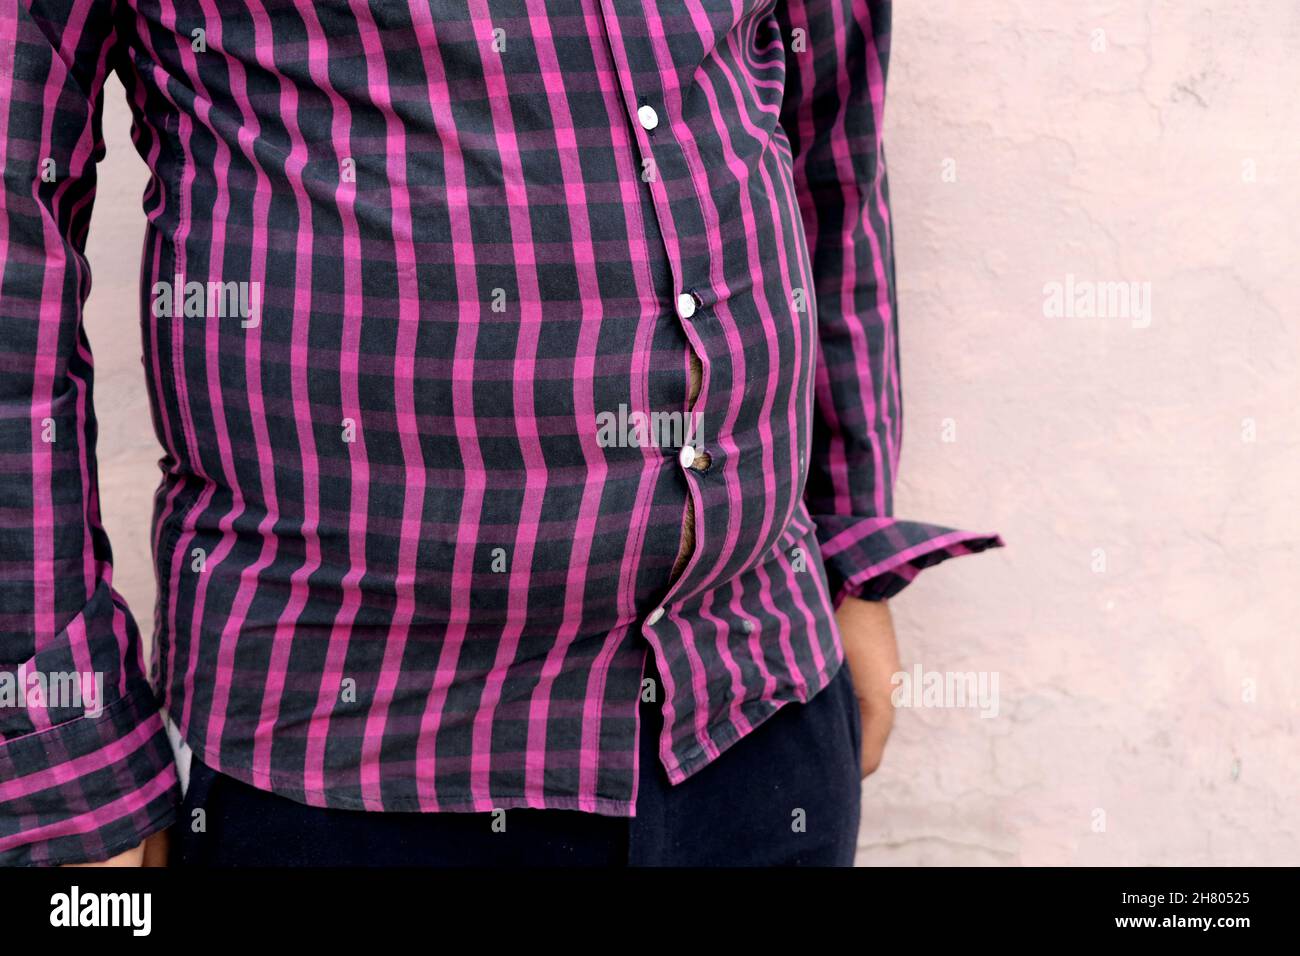 A Fat man wearing tight shirt, appearance insecurities, hormonal dis balance Stock Photo